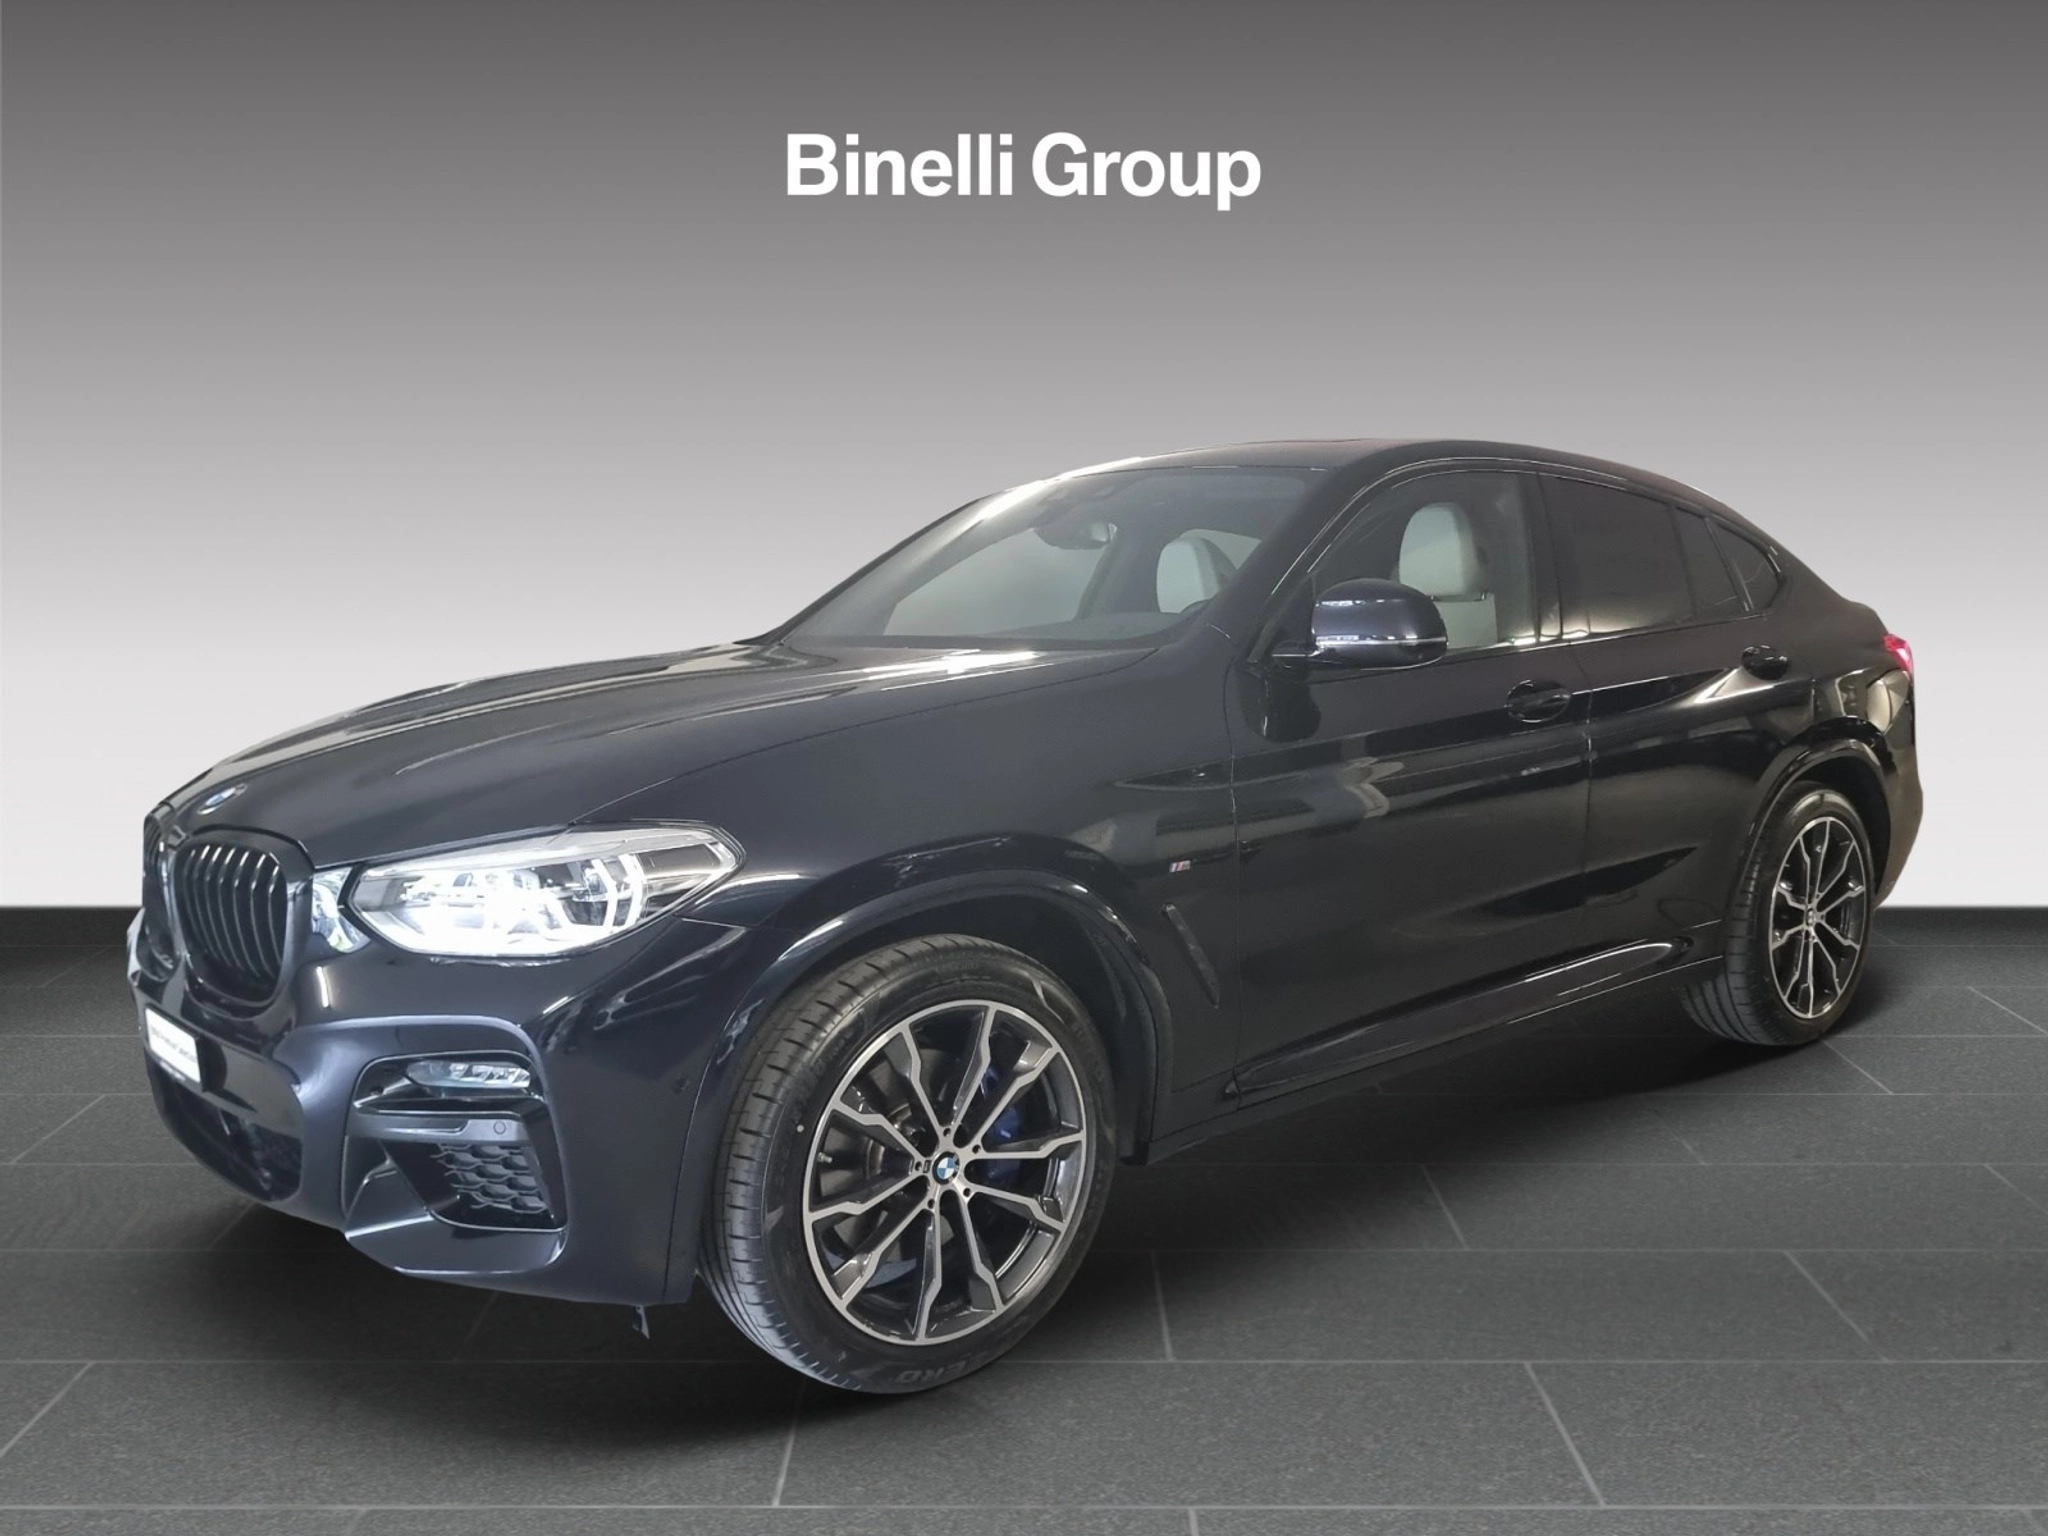 BMW-X4-car-image